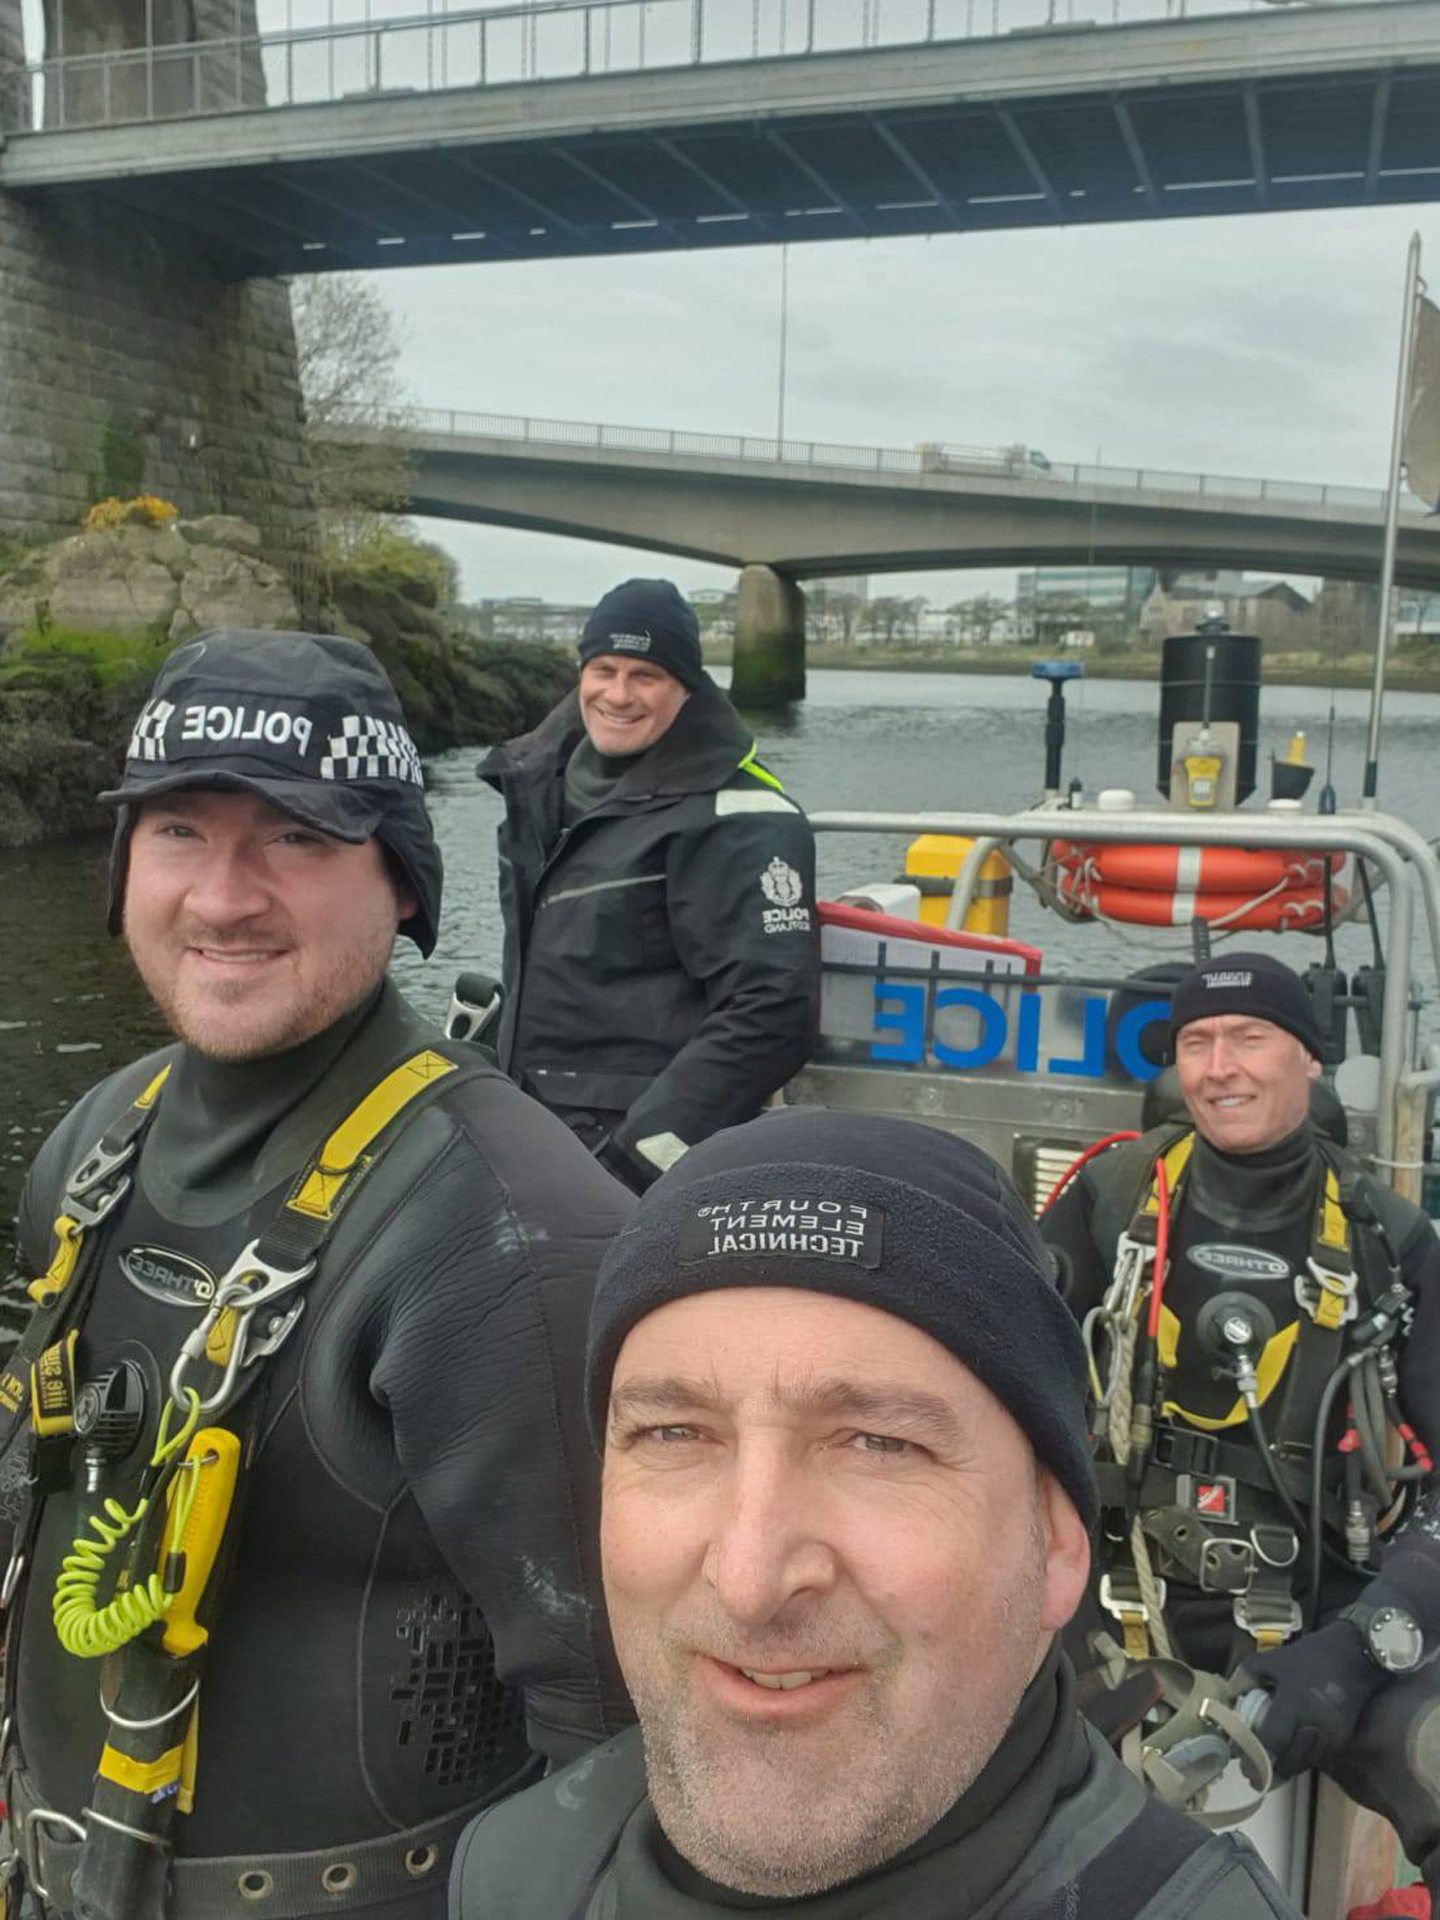 Police Scotland Dive Marine Unit on a police boat.